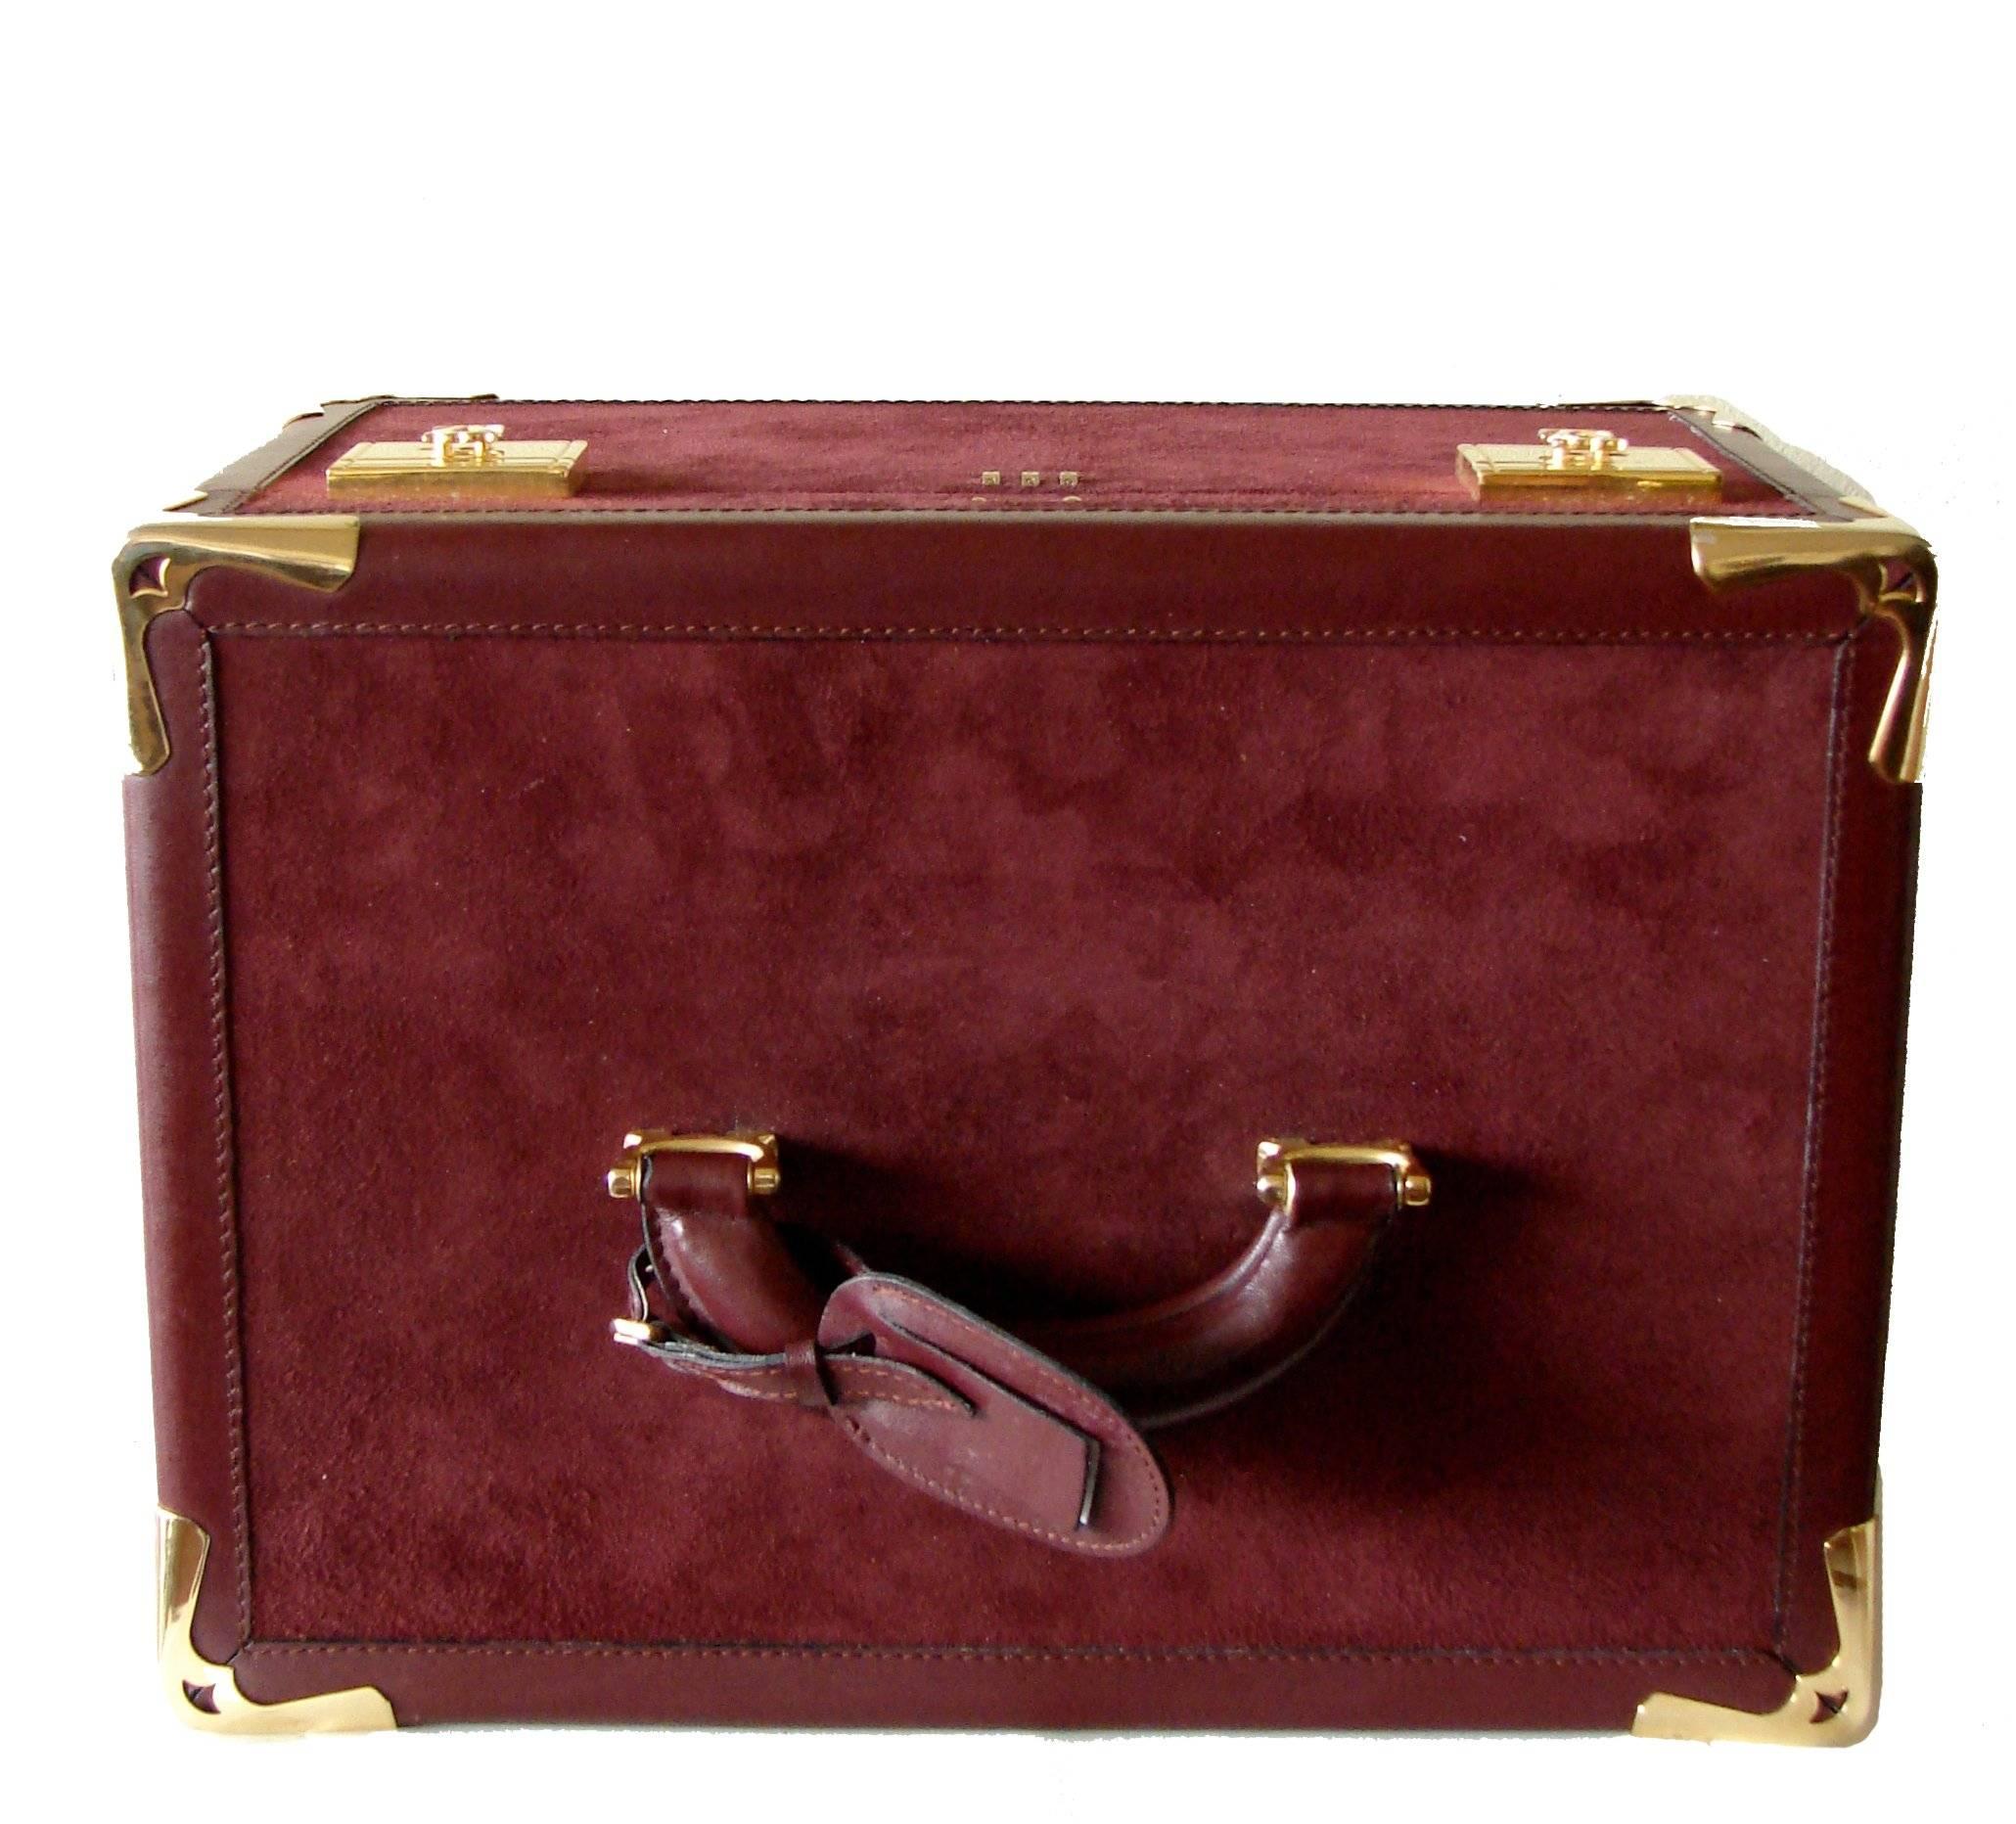 Brown Le Must De Cartier Train Case Travel Bag with Dust Bag + Box Vintage 70s Luggage